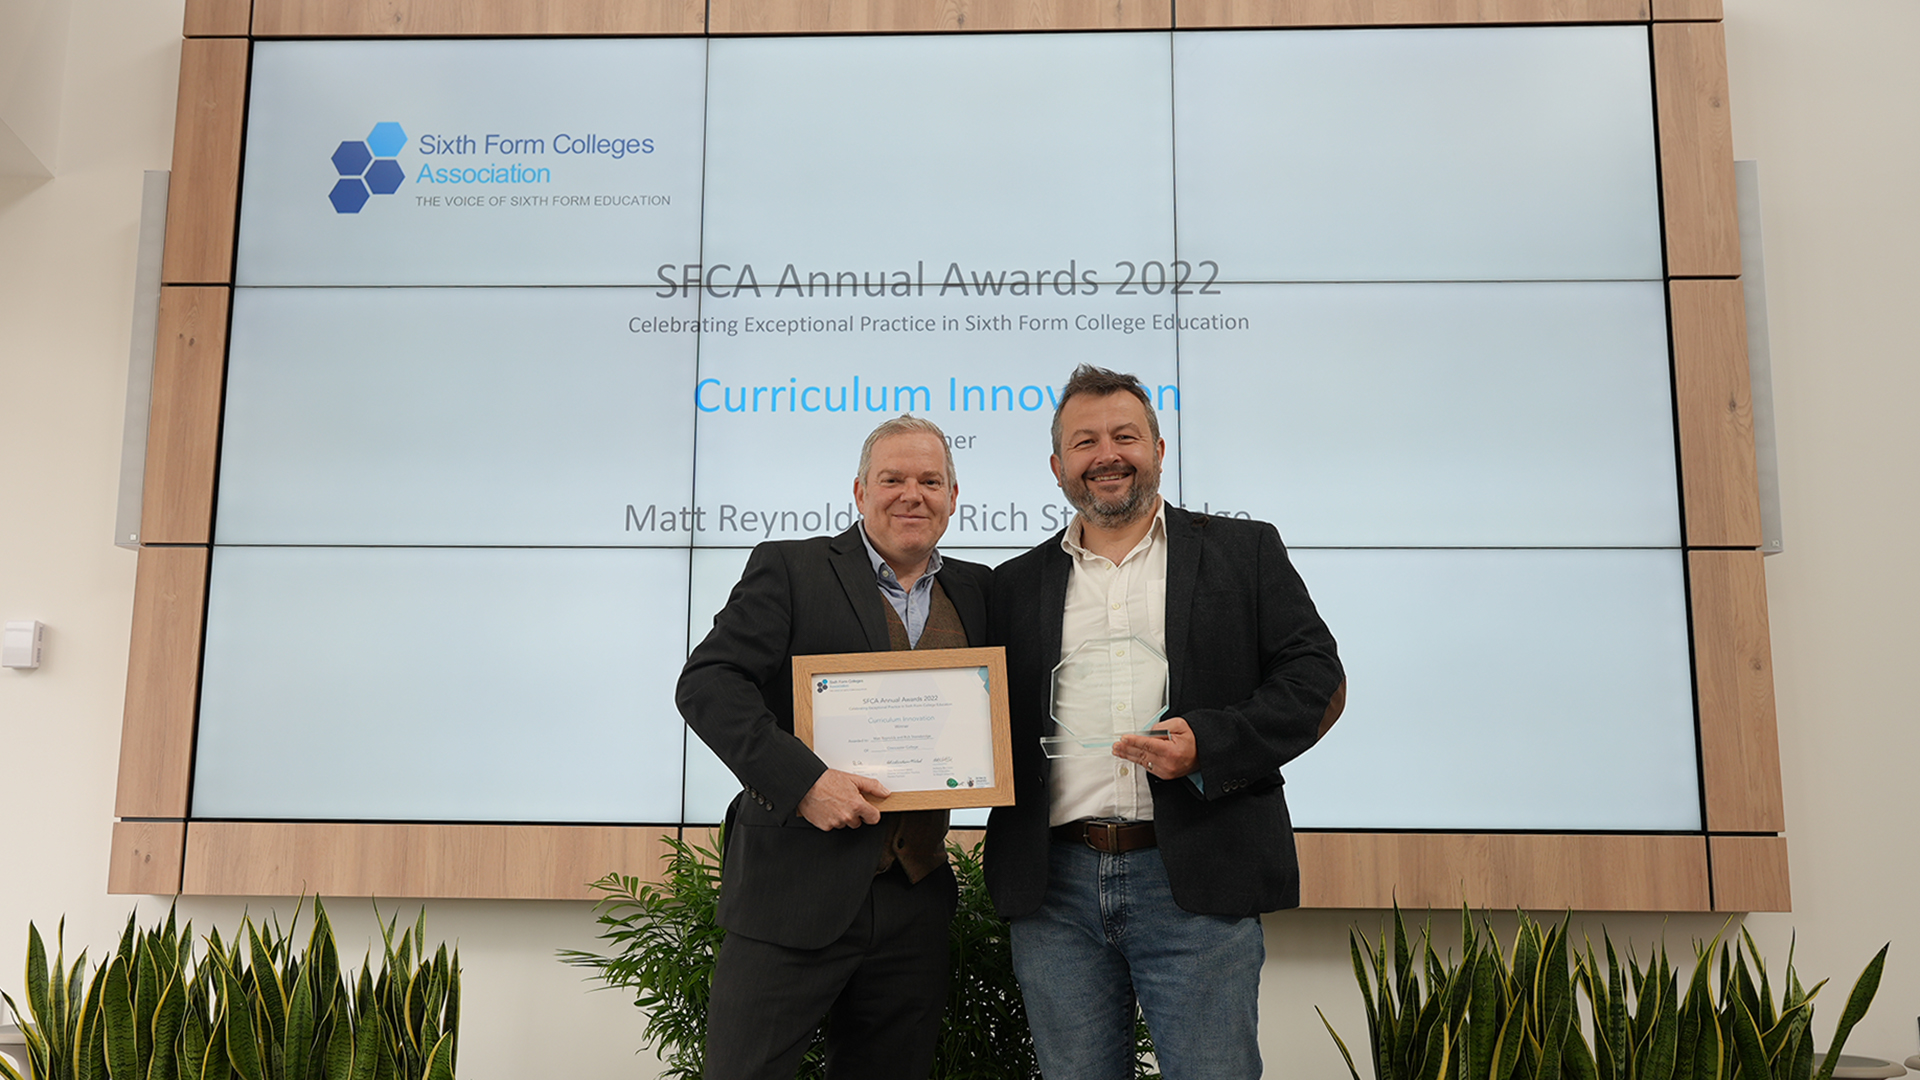 Cirencester College Wins Prestigious SFCA Award for Curriculum Innovation